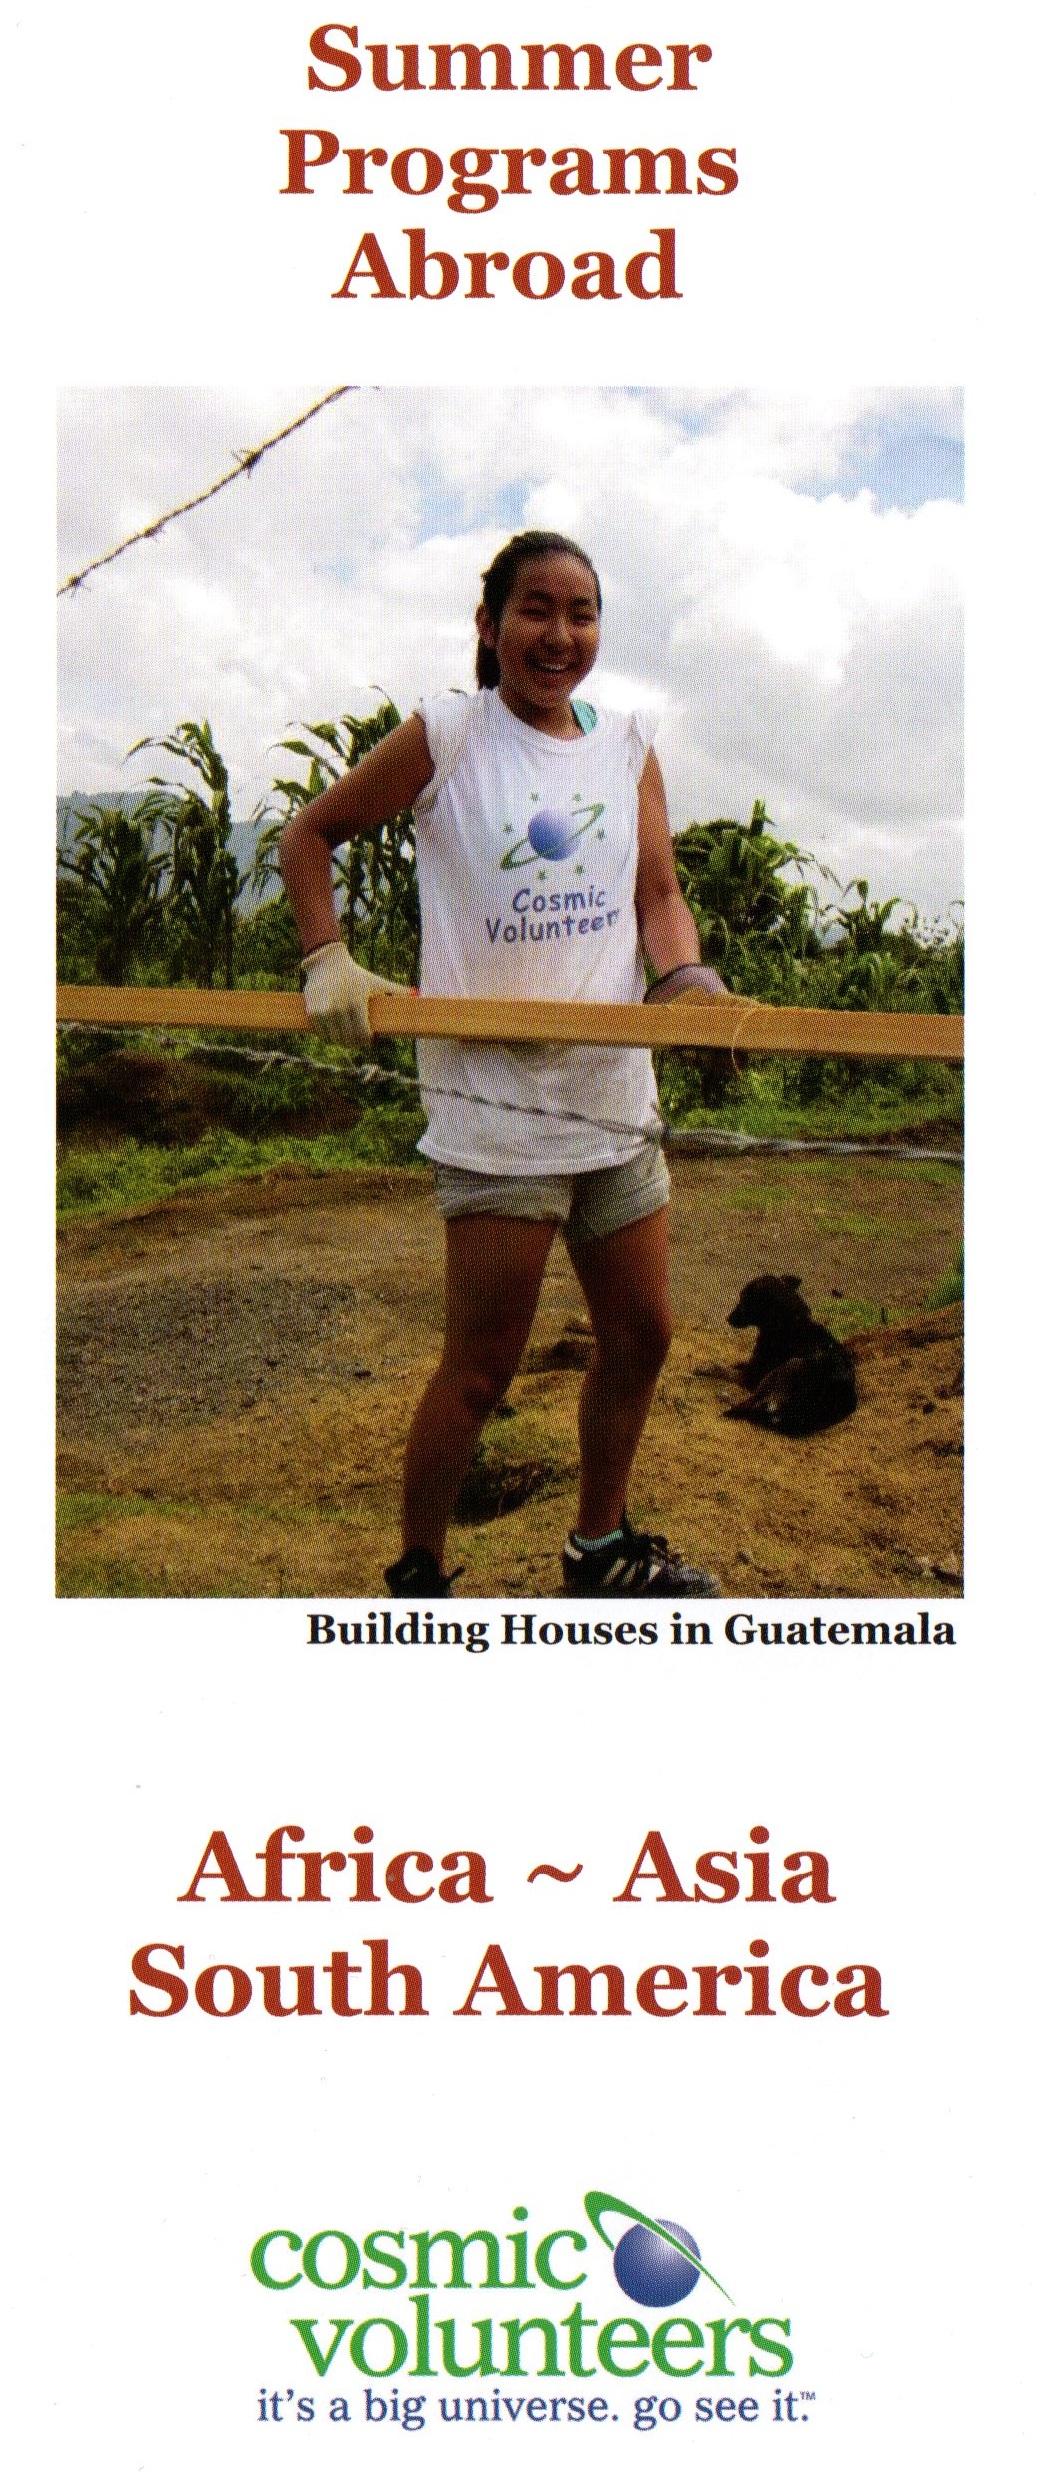 Volunteer to Build Houses in Latin America